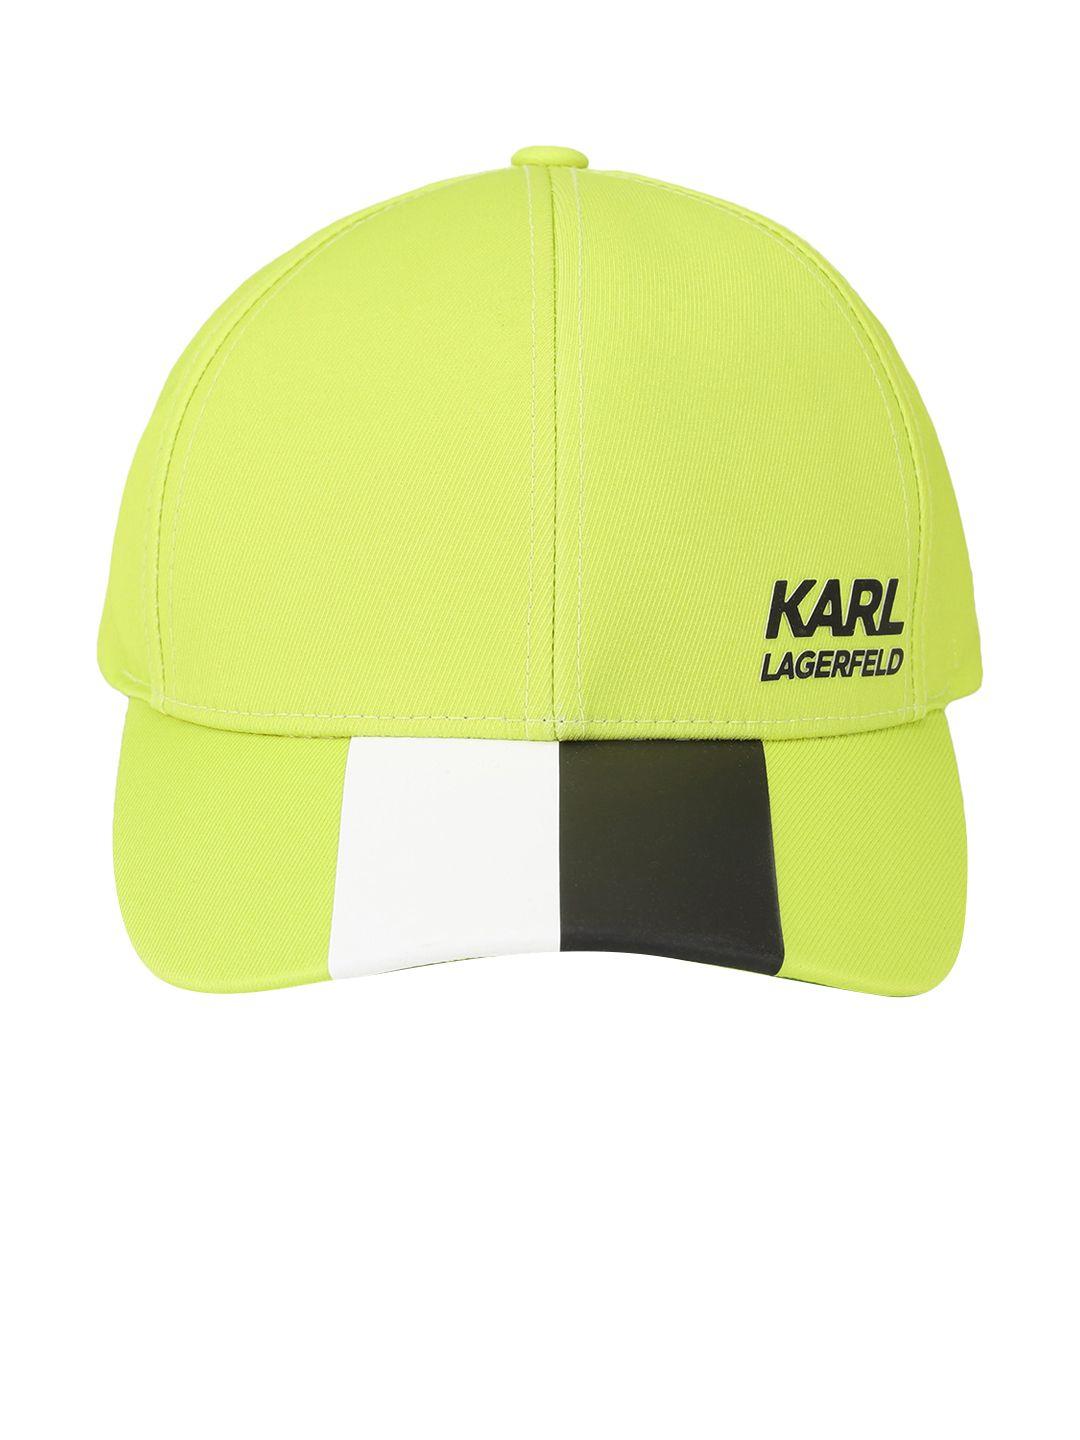 karl lagerfeld men yellow printed baseball cap